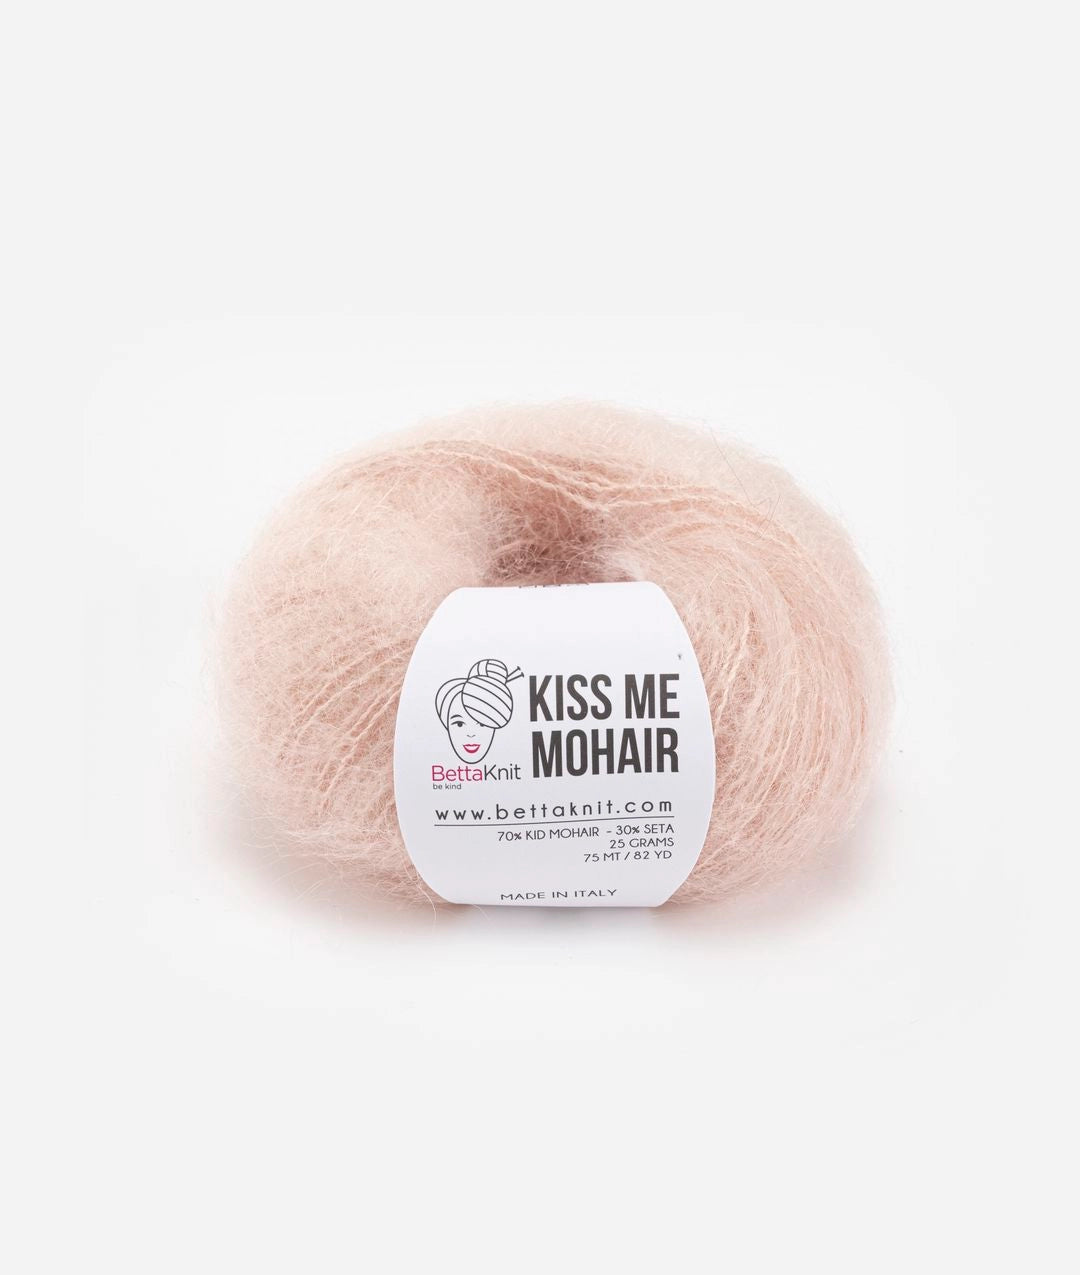 Kiss Me Mohair, Soft Yarn - 70% Kid Mohair — 30% Silk